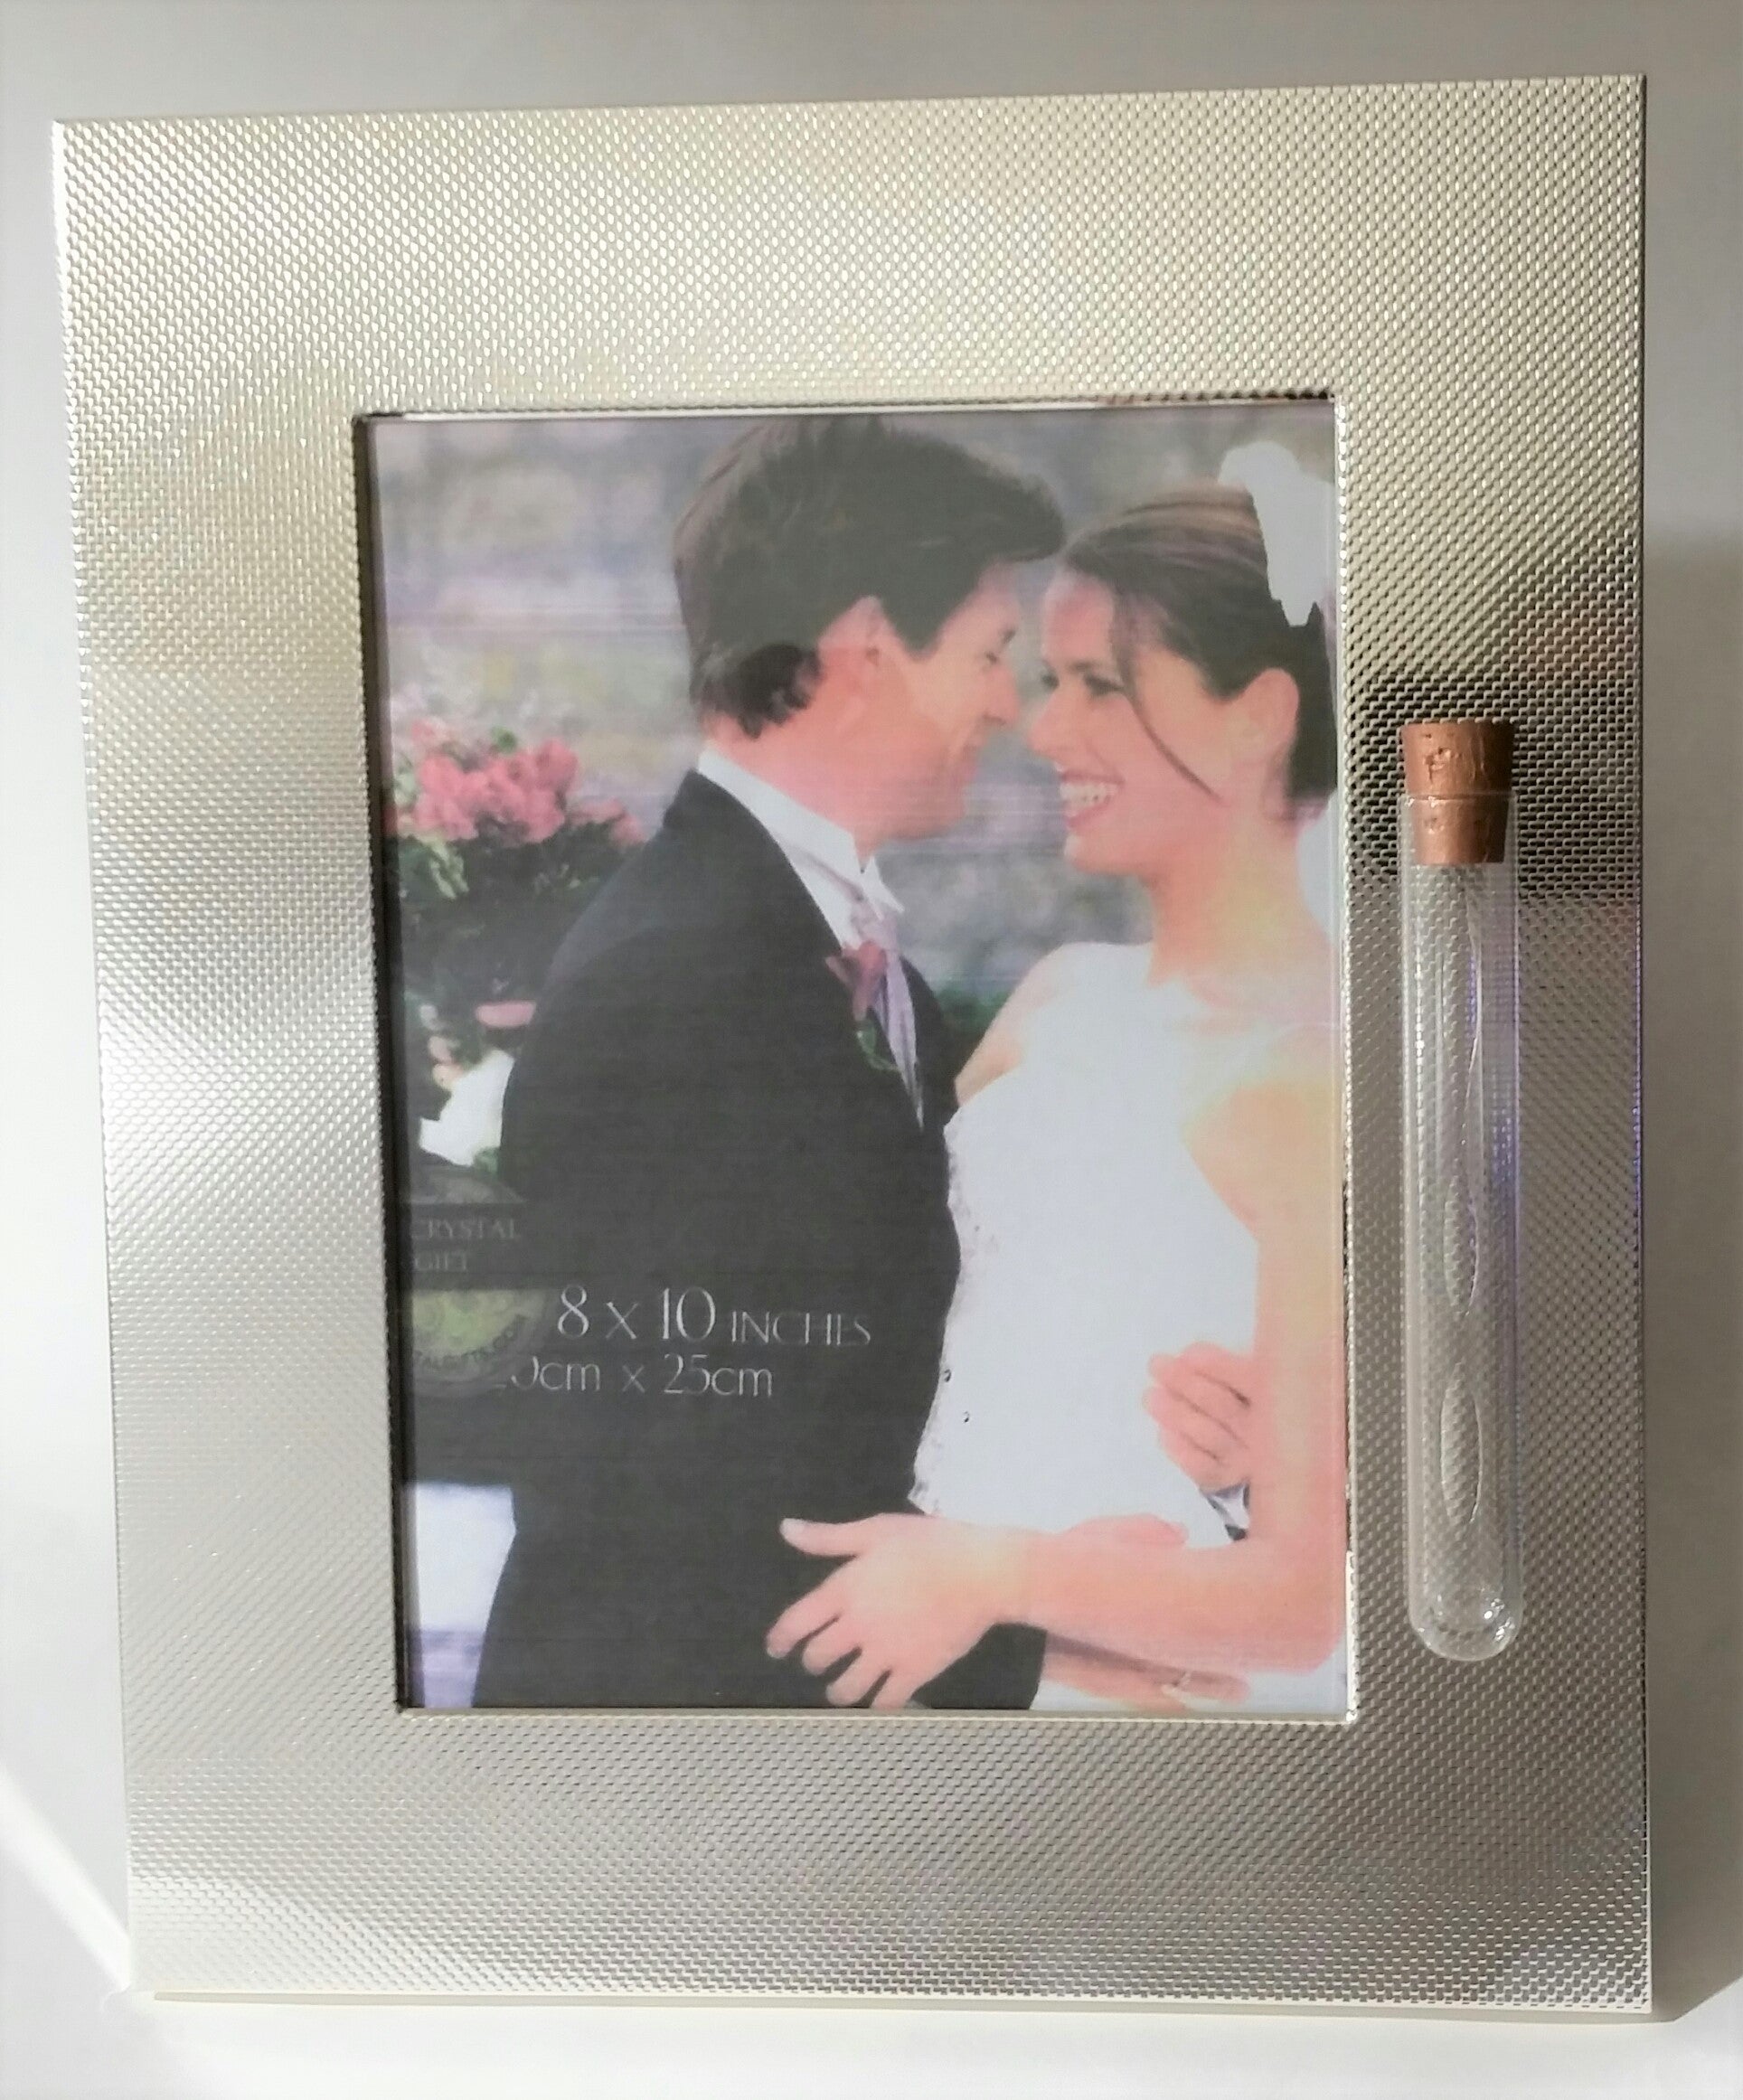 Wedding Picture Frame - Holds Shards from Jewish Wedding Ceremony Jewish Engagement - Holds 8x10 Photo